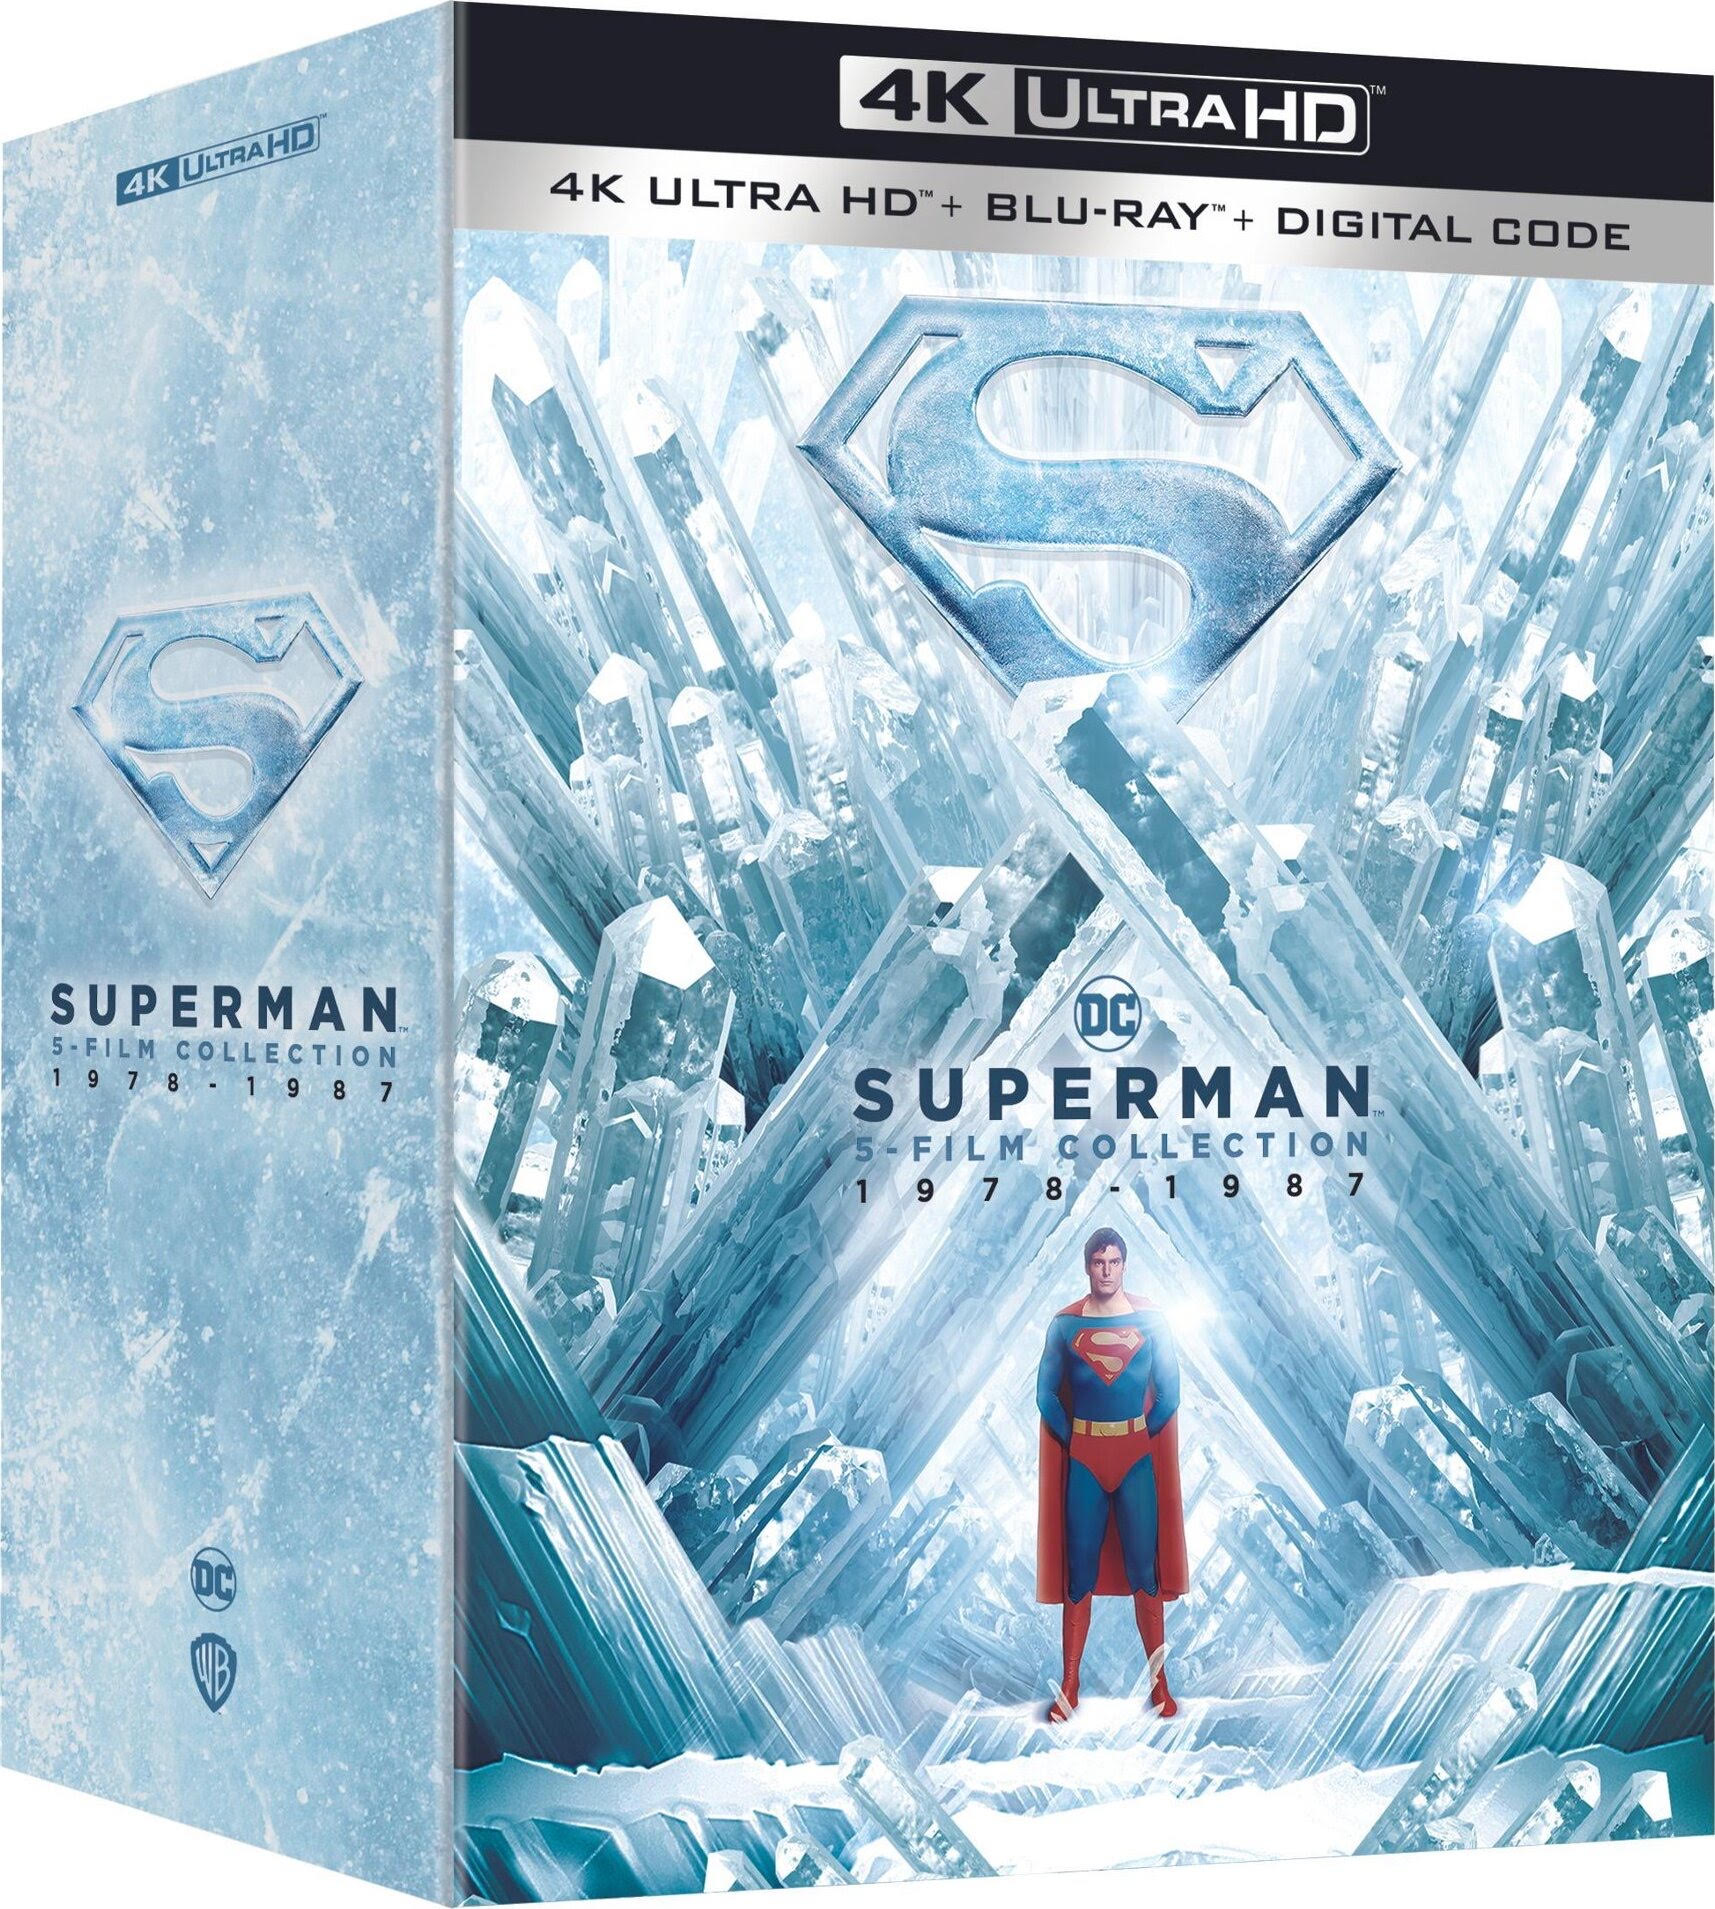 Superman-5-film collection-4K-standard-box